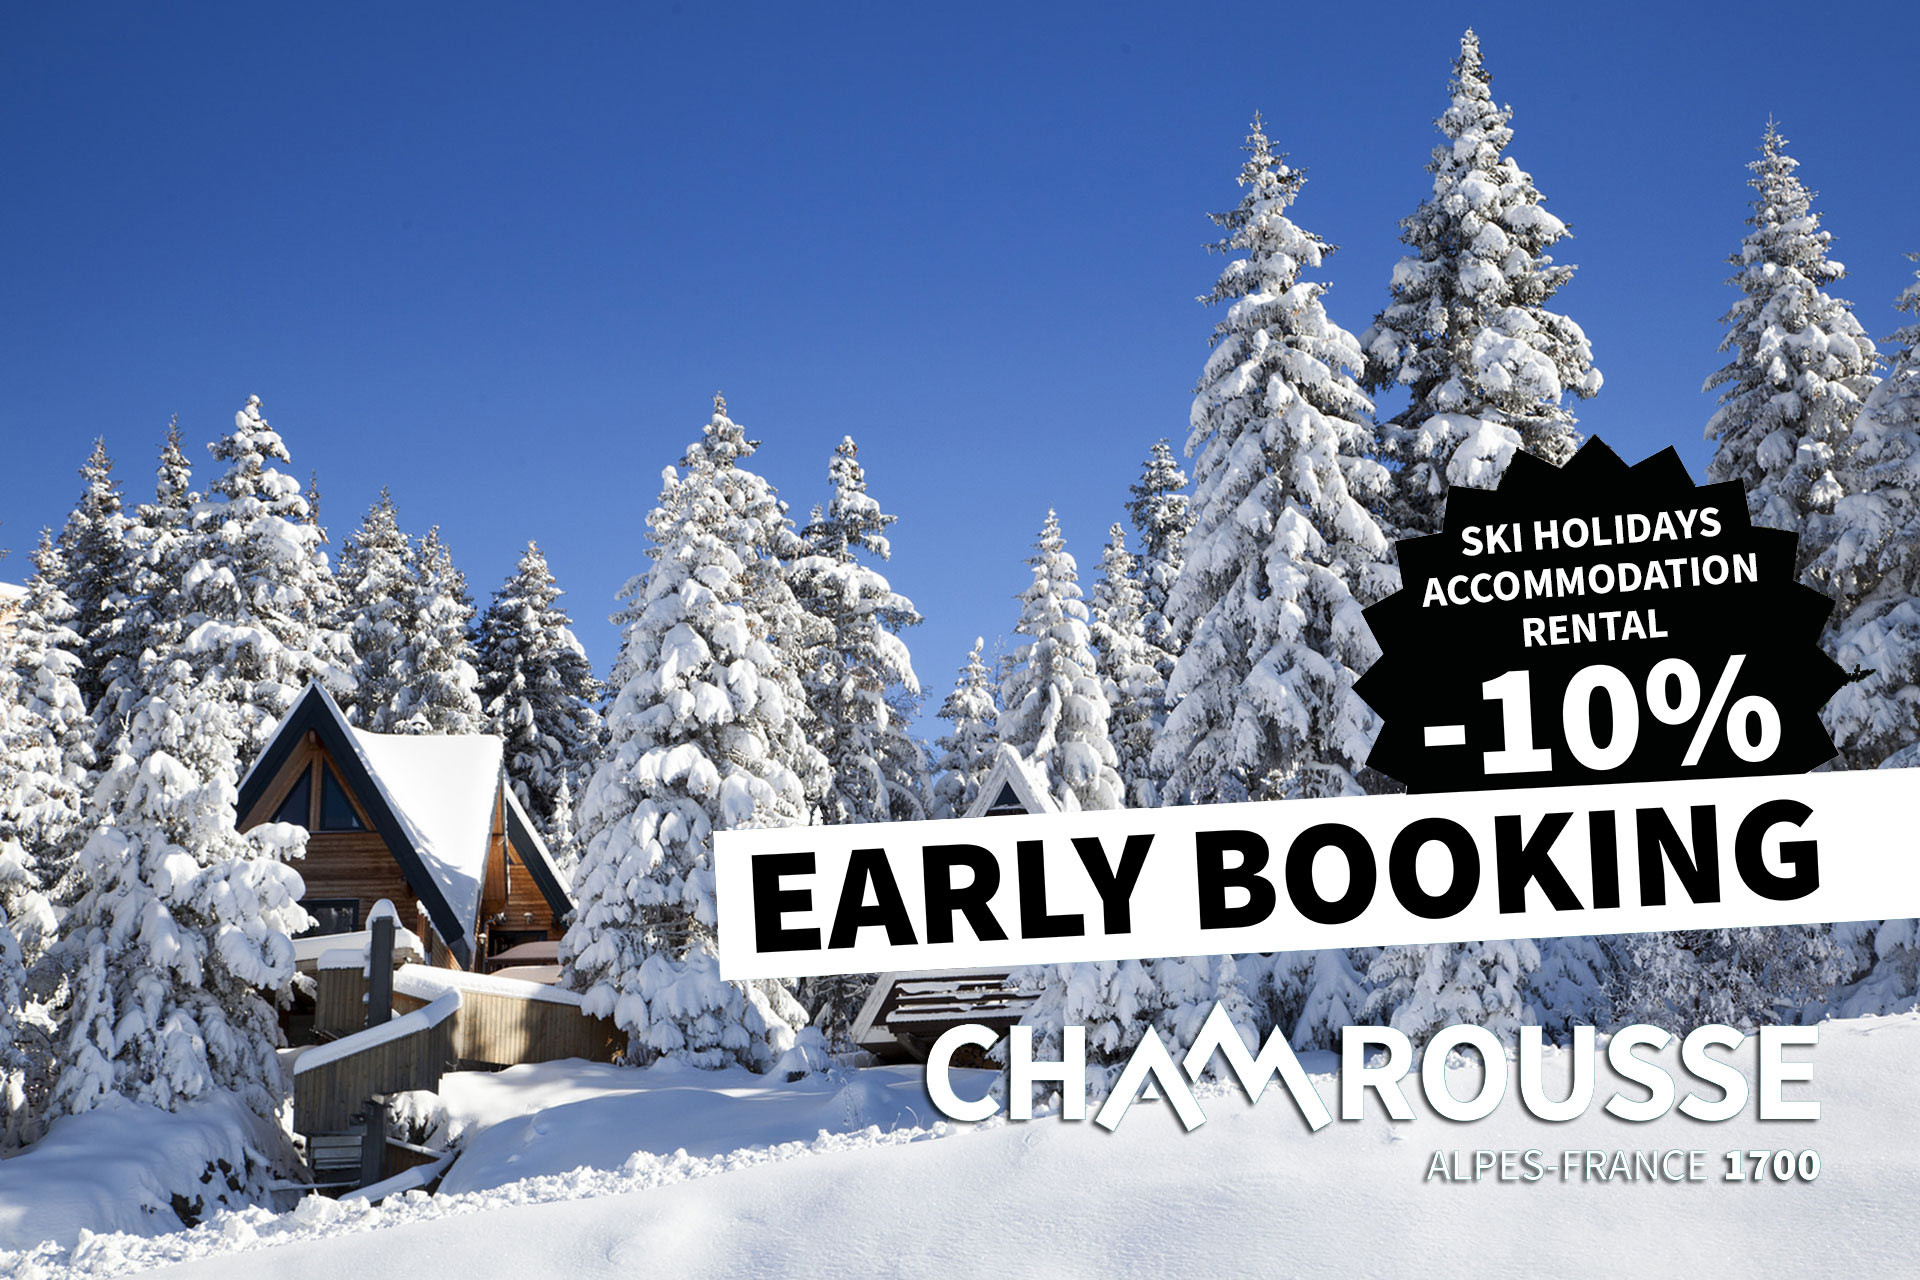 Chamrousse early booking accommodation rental ski holidays